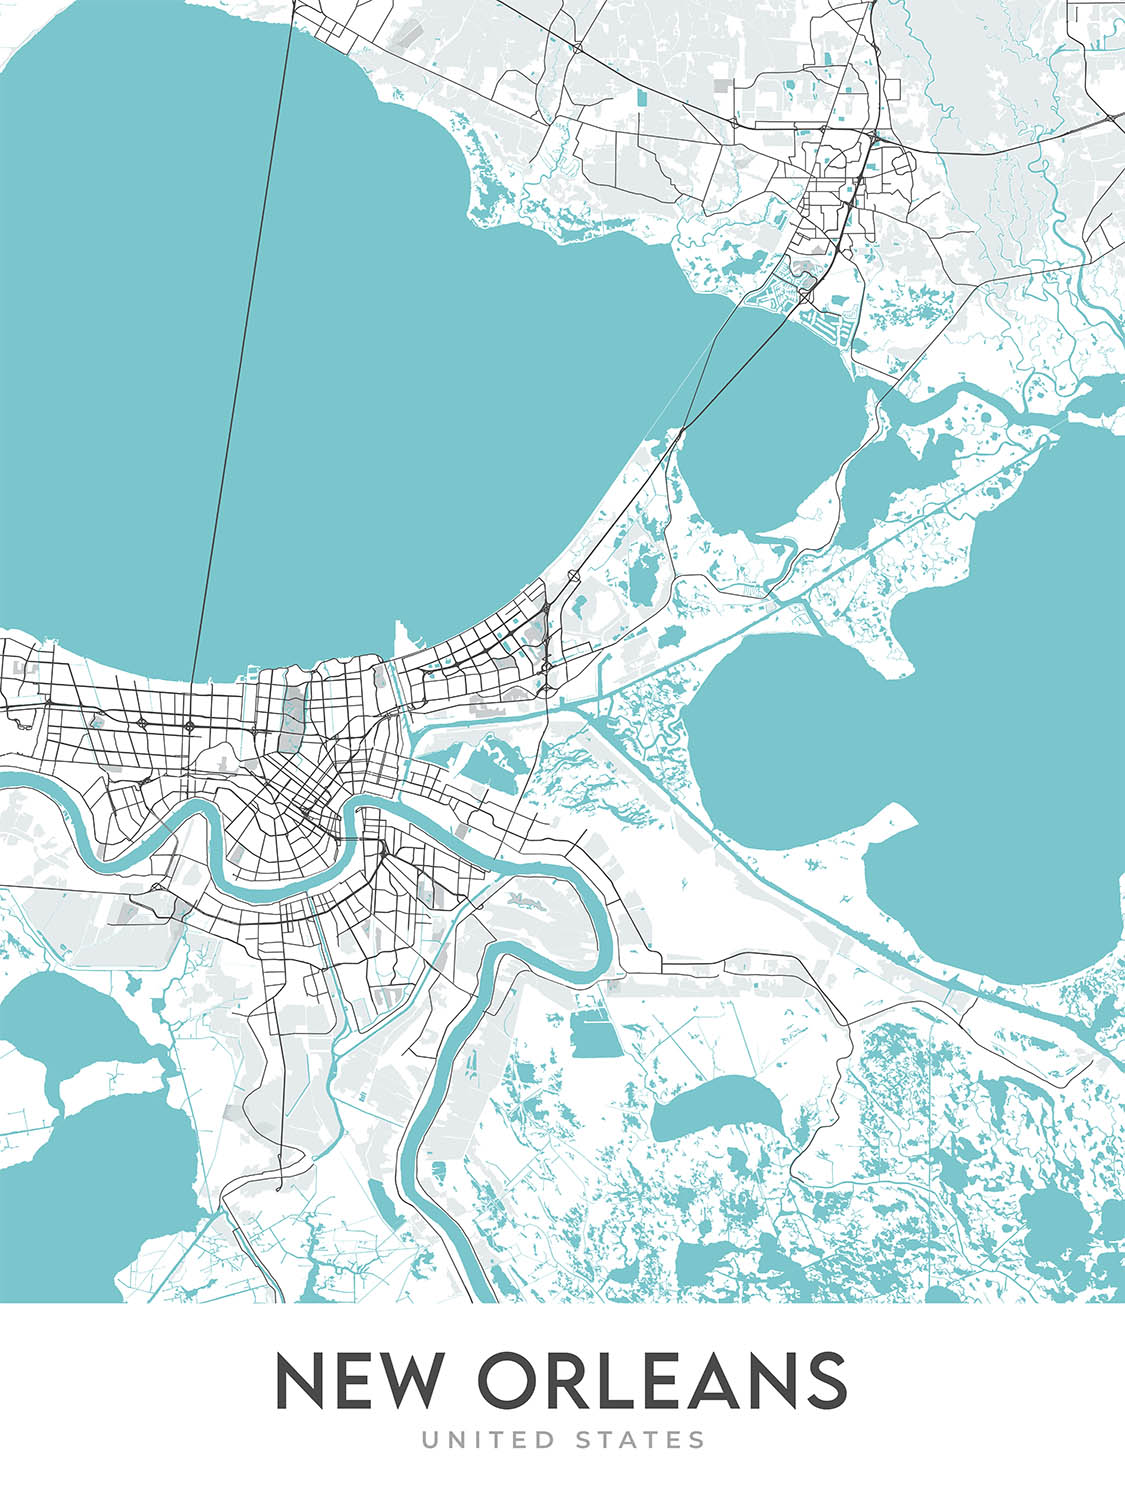 Modern City Map of New Orleans, LA: French Quarter, Garden District, Audubon Park, St. Charles Ave, Magazine St